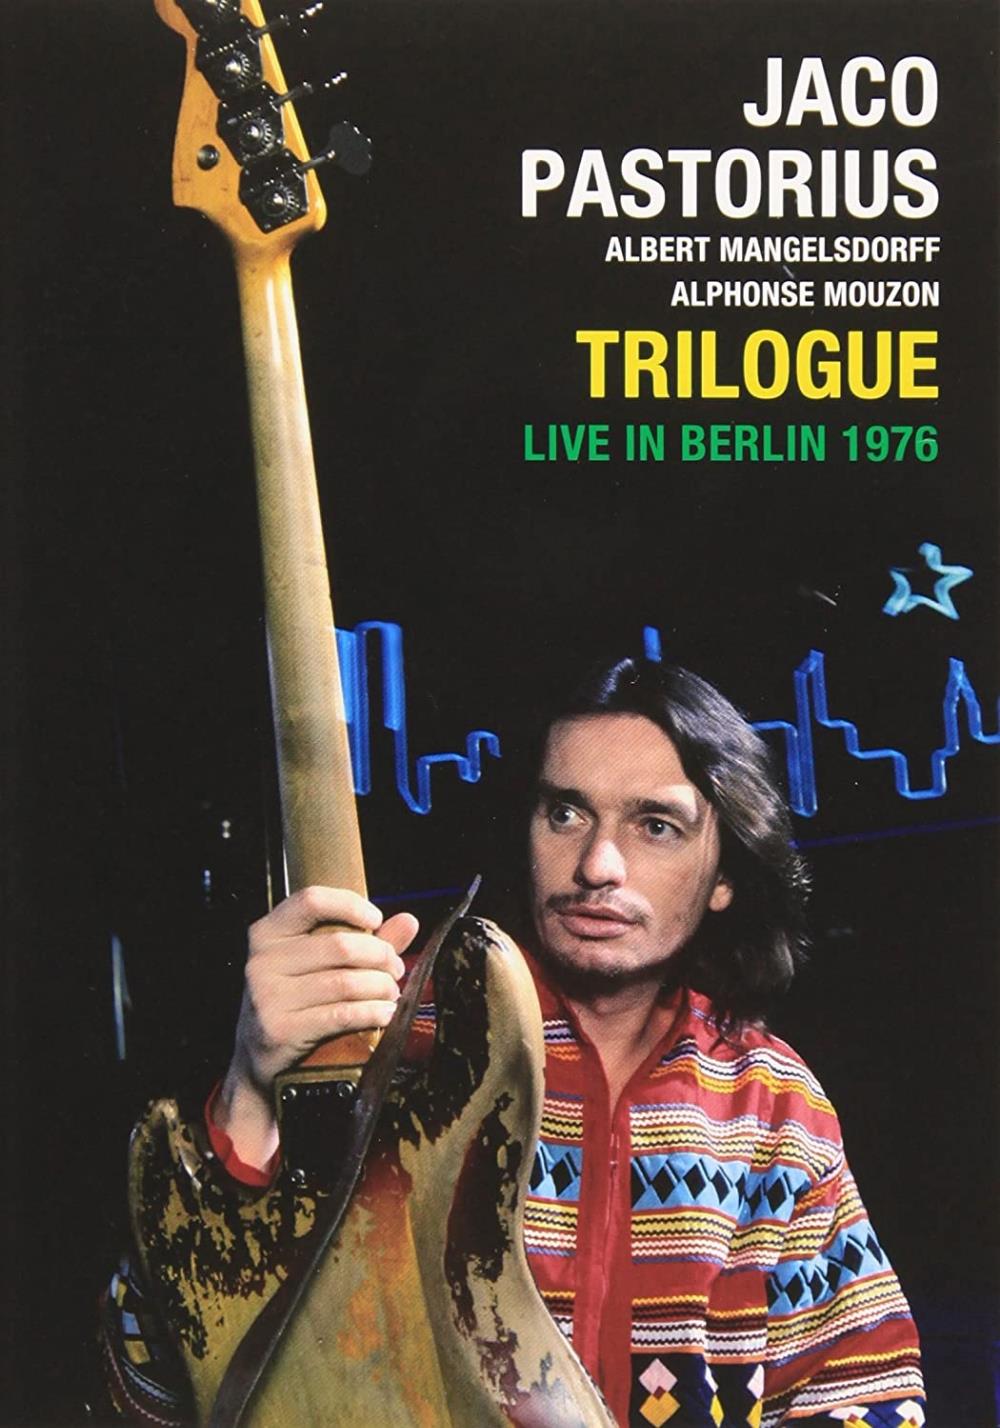 Jaco Pastorius Trilogue - Live In Berlin 1976 (with Alphonse Mouzon and Albert Mangelsdorff) album cover